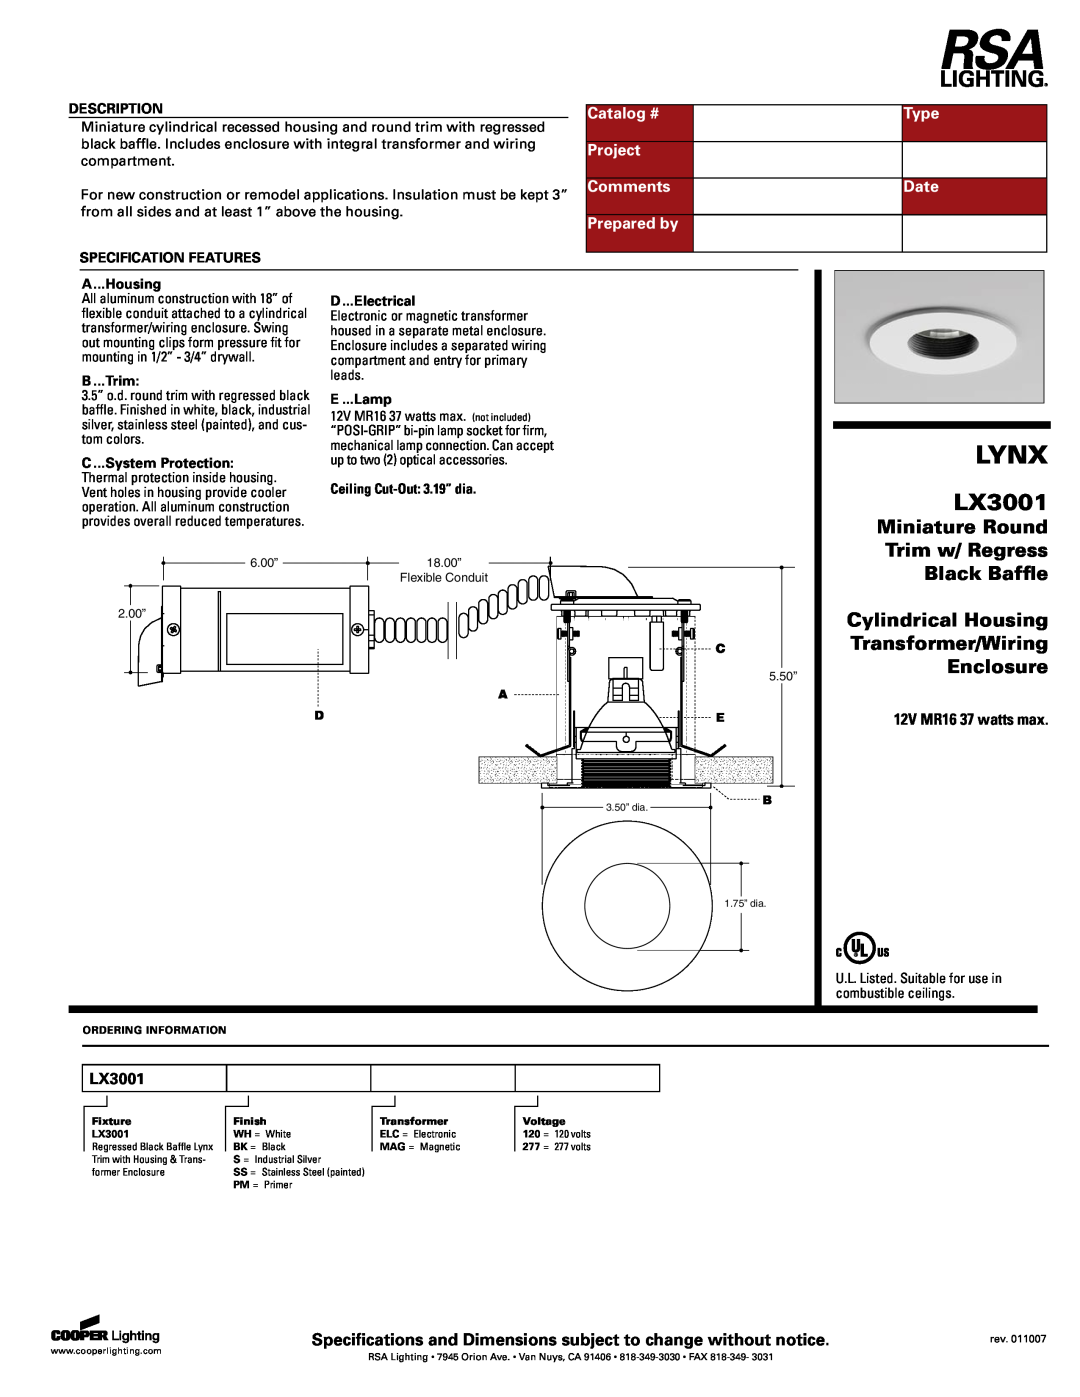 Cooper Lighting LX3001 specifications Lynx, Miniature Round, Trim w/ Regress, Black Baffle, Cylindrical Housing, Enclosure 